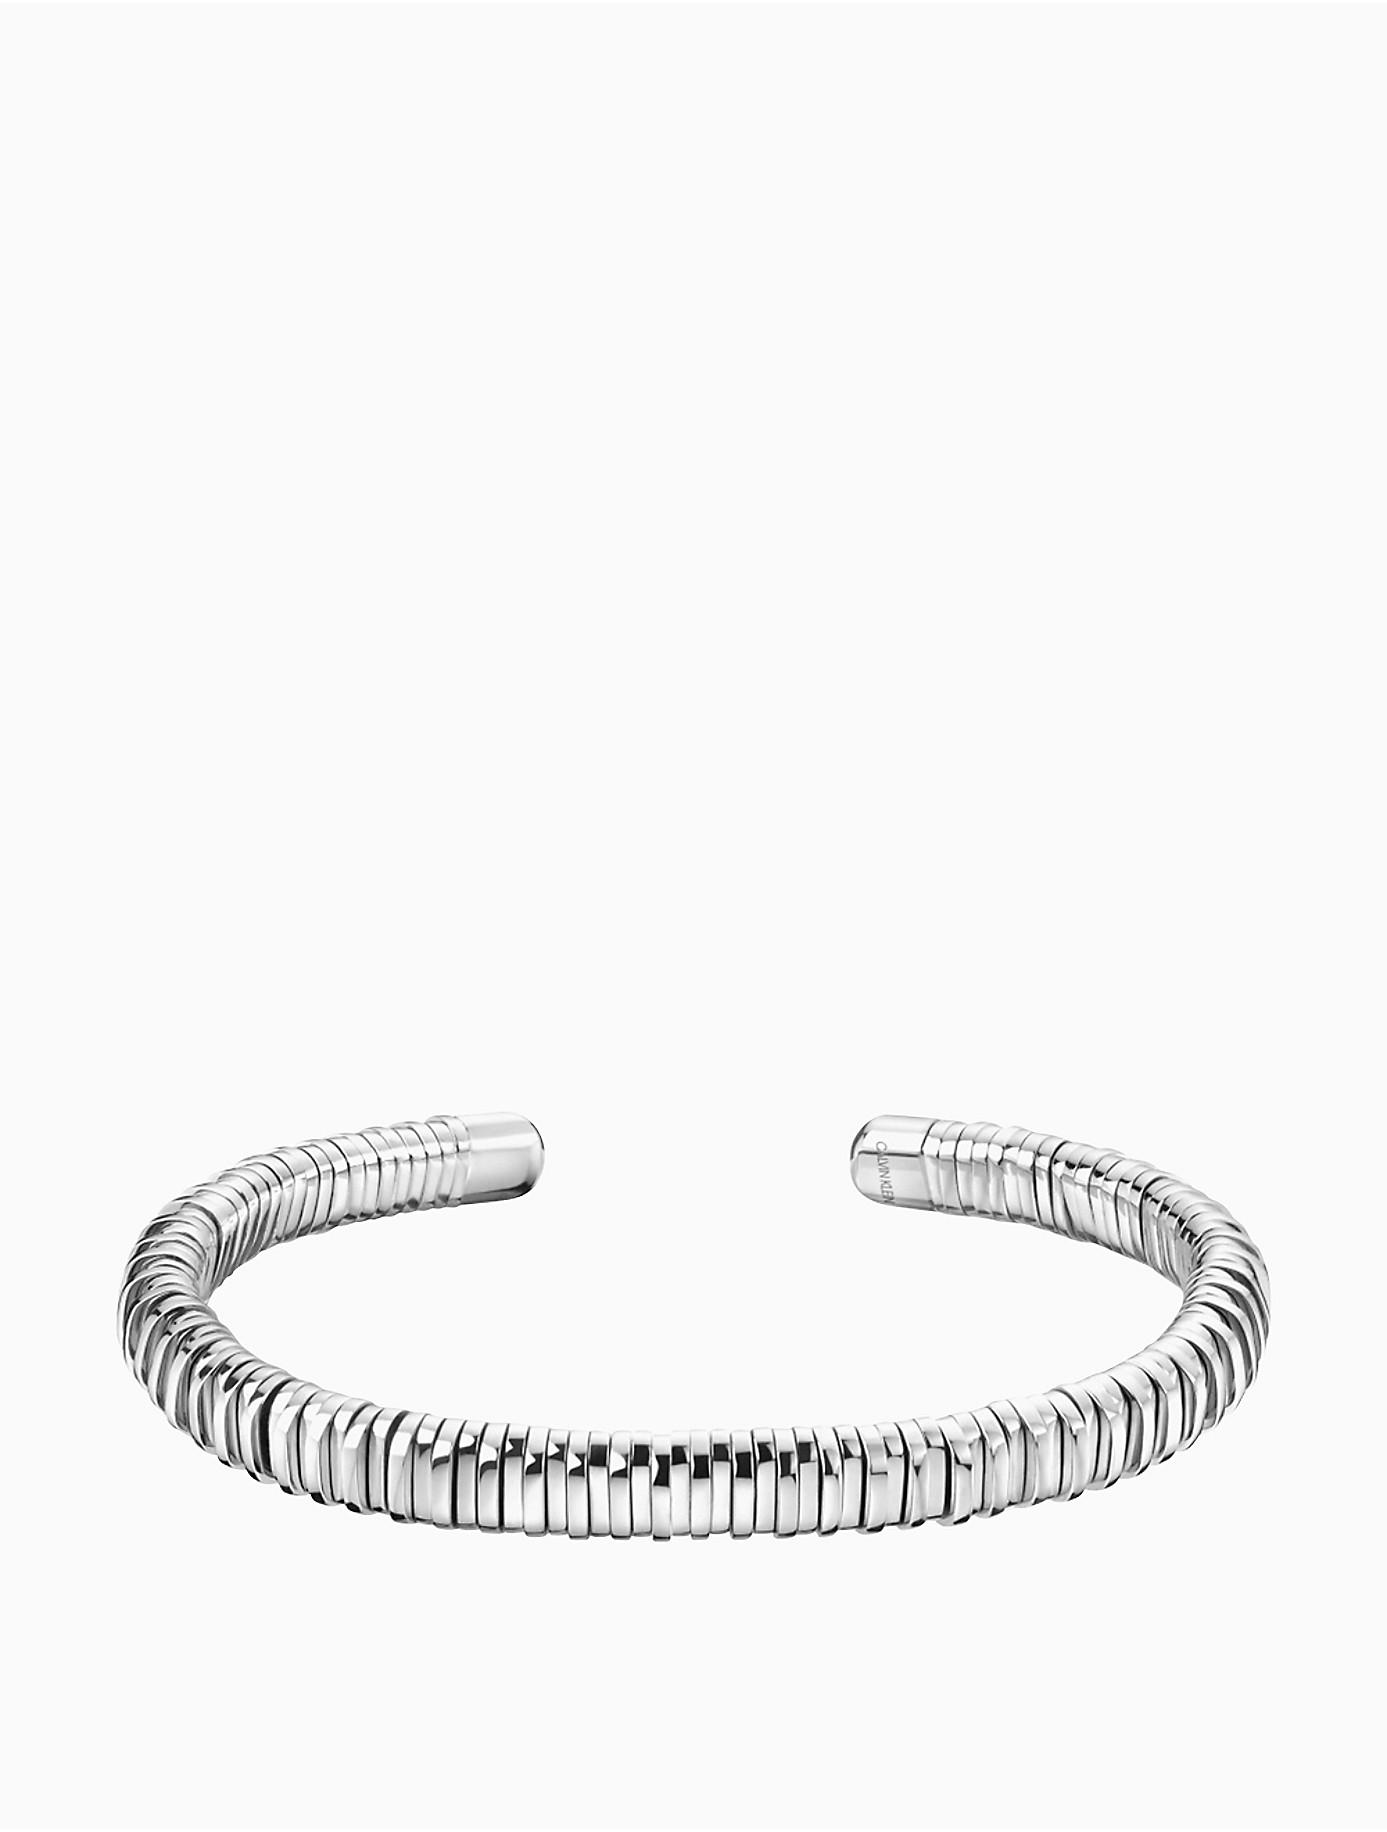 Calvin Klein Spring Silver Bangle in Metallic for Men - Lyst